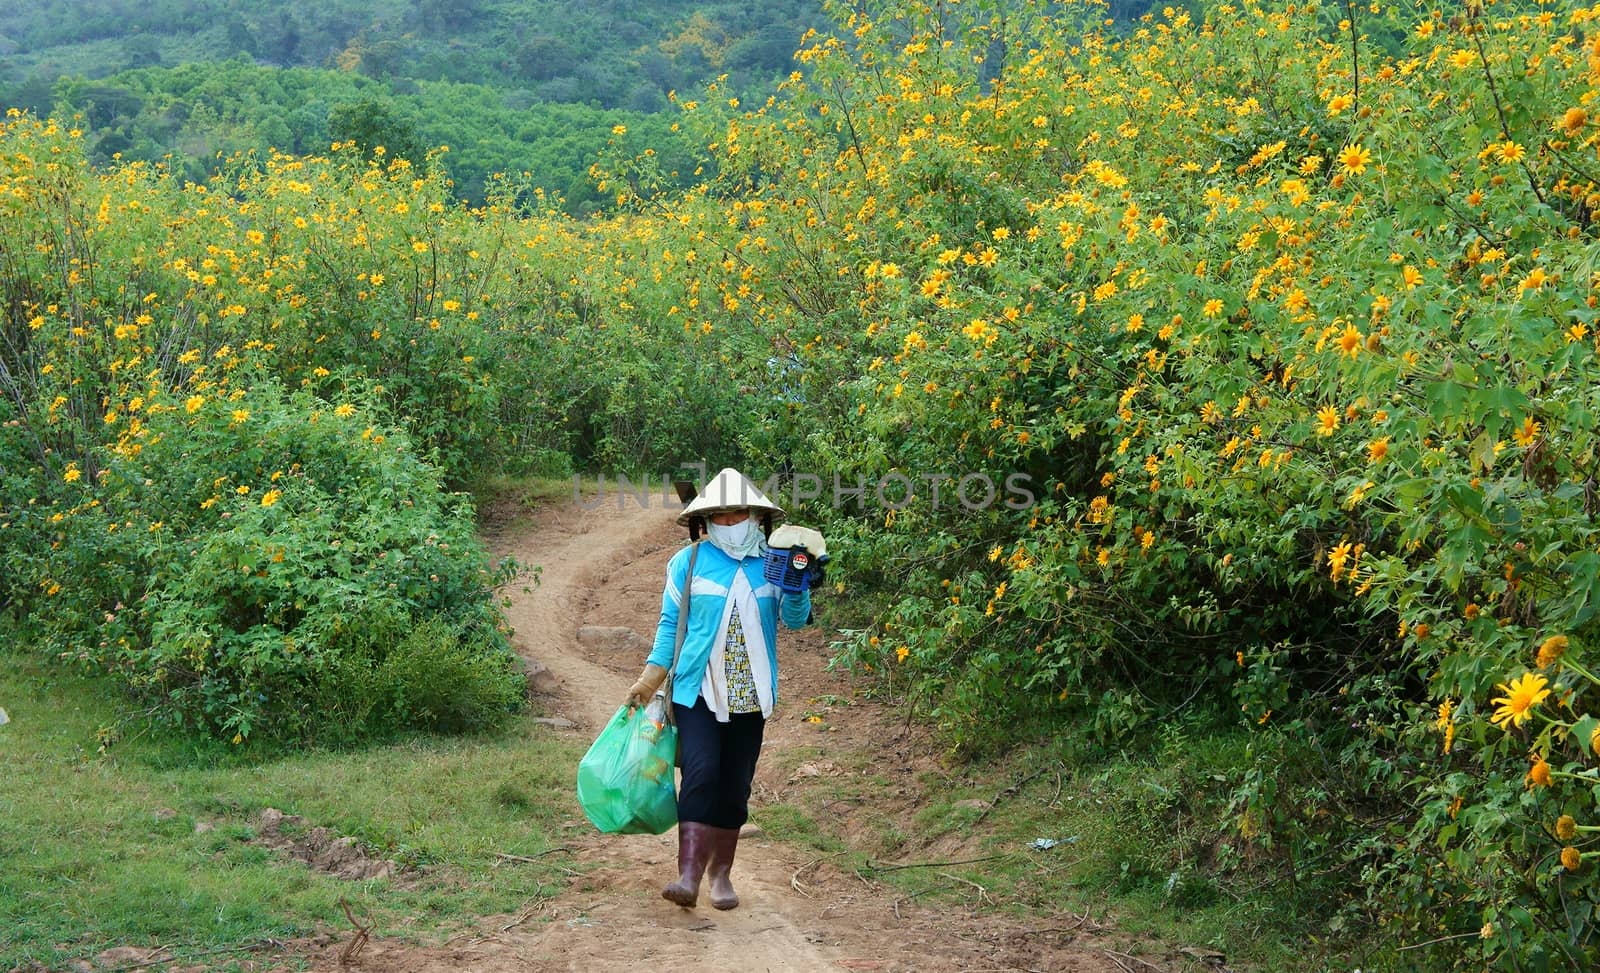 DA LAT, VIET NAM- NOV 10: Asian woman walk on path of countryside, bush of wild sunflower bloom in yellow, colorful scene, Vietnamese farmer with beautiful nature, Dalat, Vietnam, Nov 10, 2014